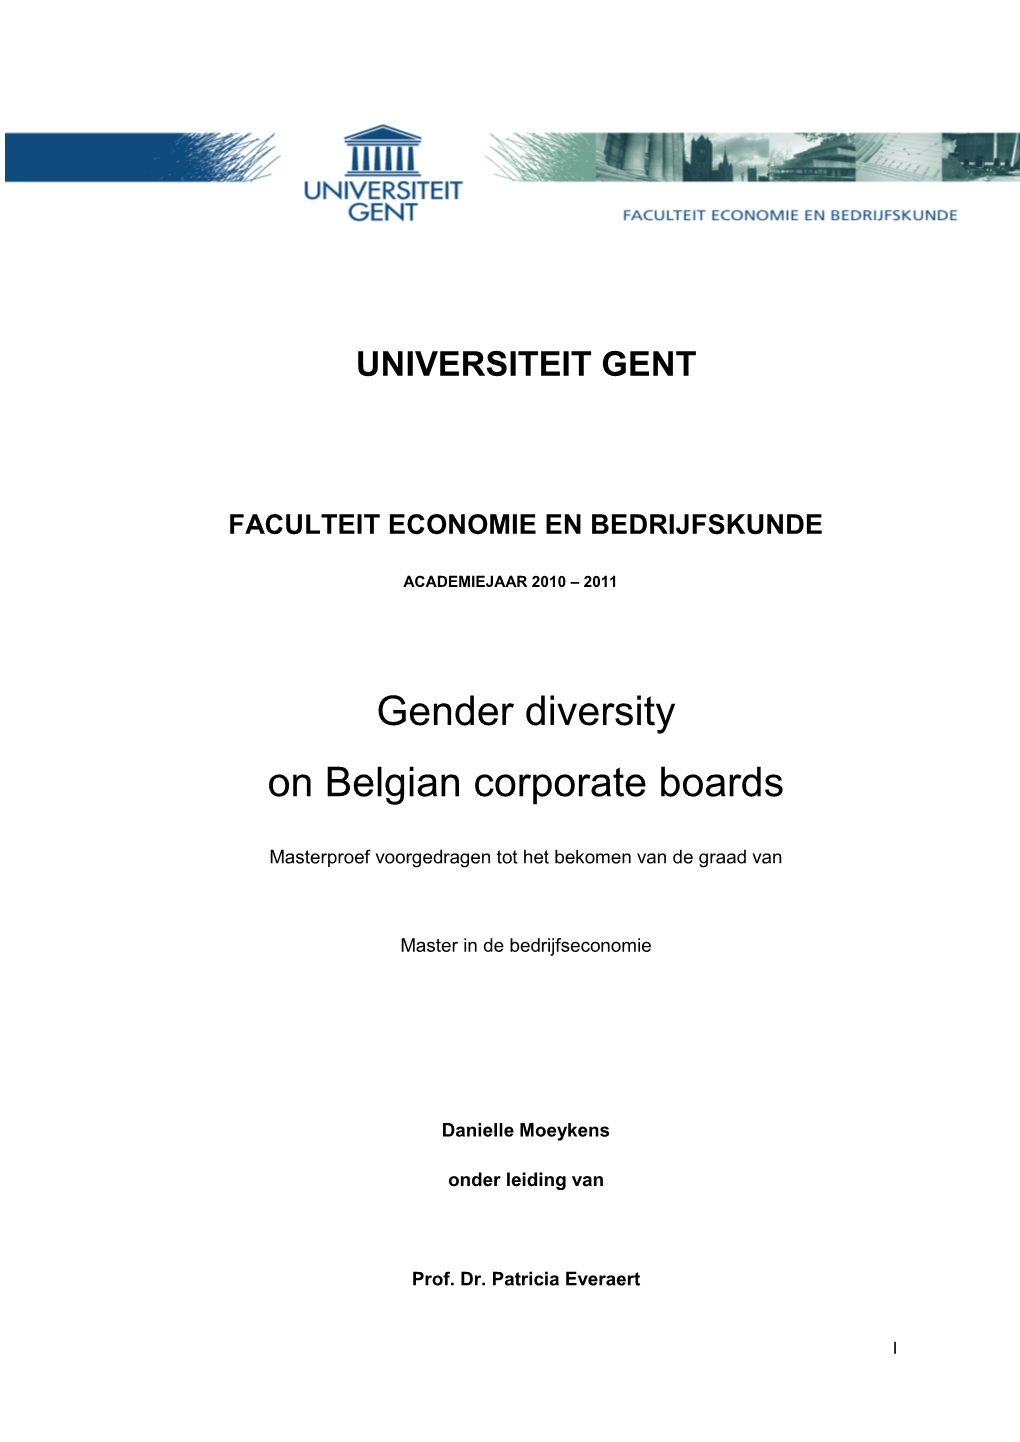 Gender Diversity on Belgian Corporate Boards